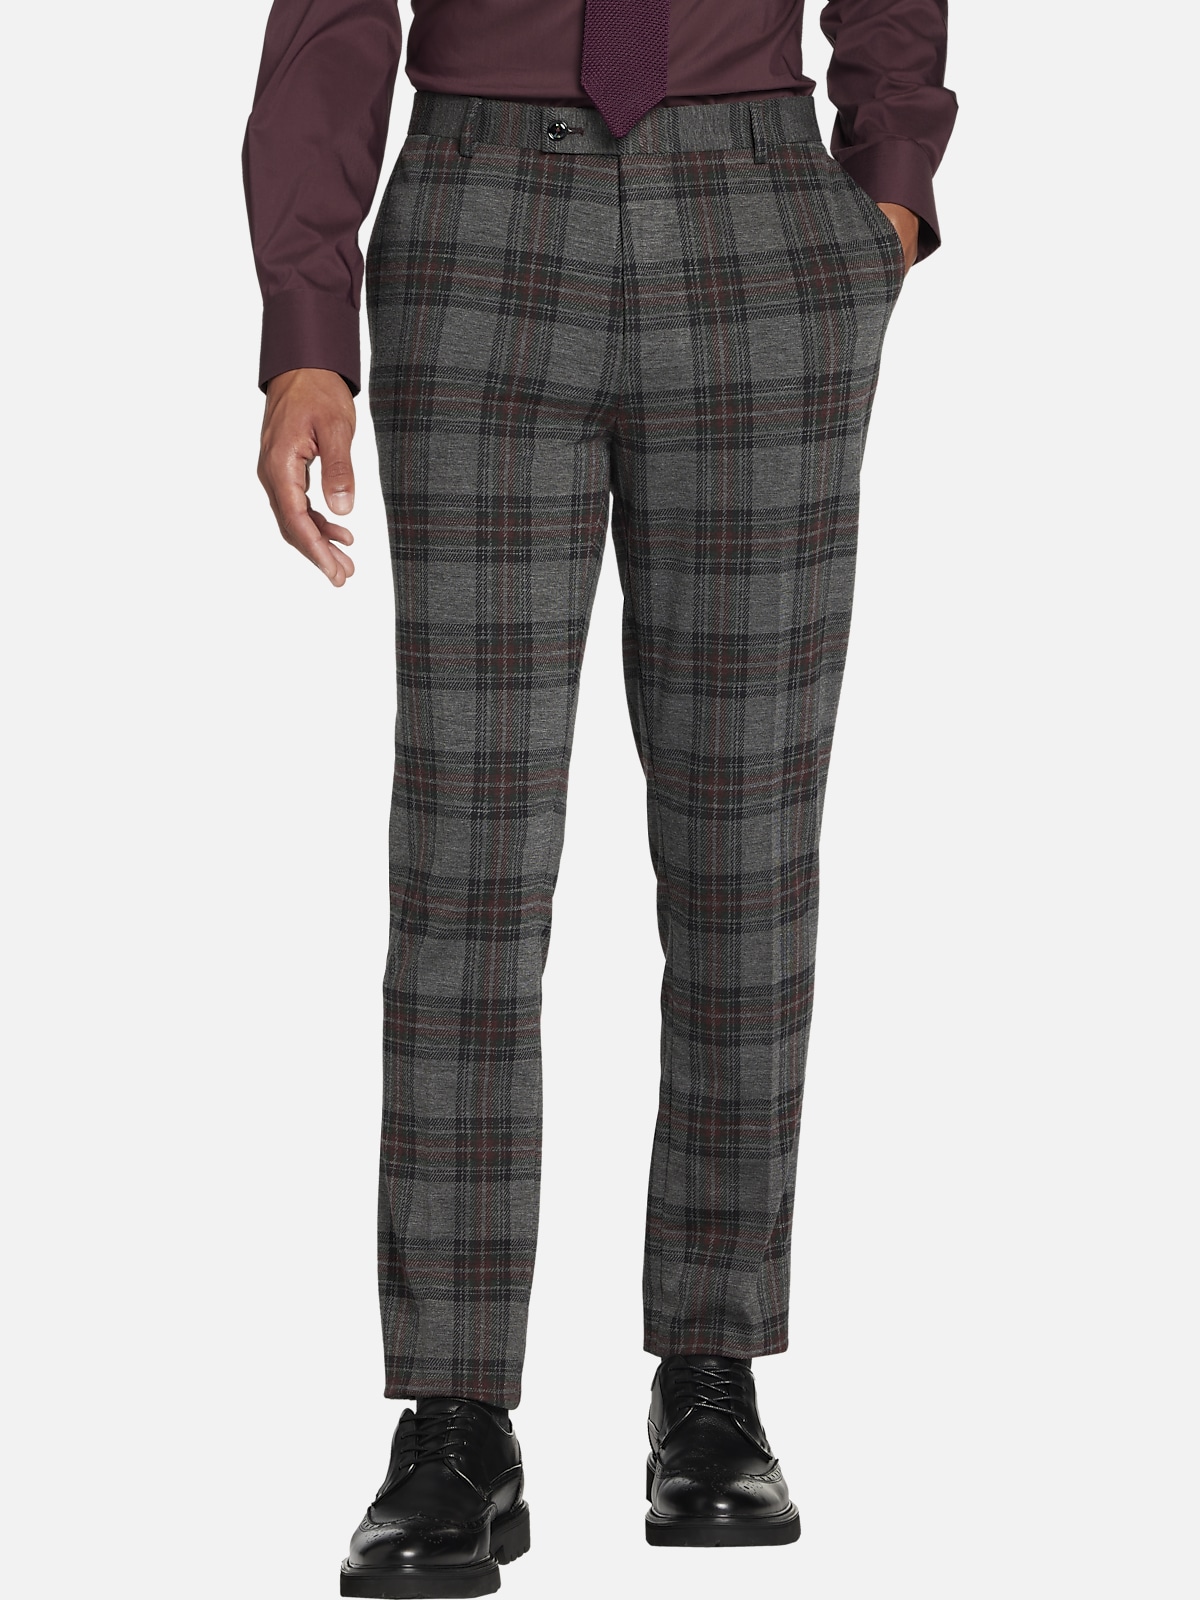 Paisley & Gray Slim Fit Tartan Plaid Suit Separates Pants | All ...